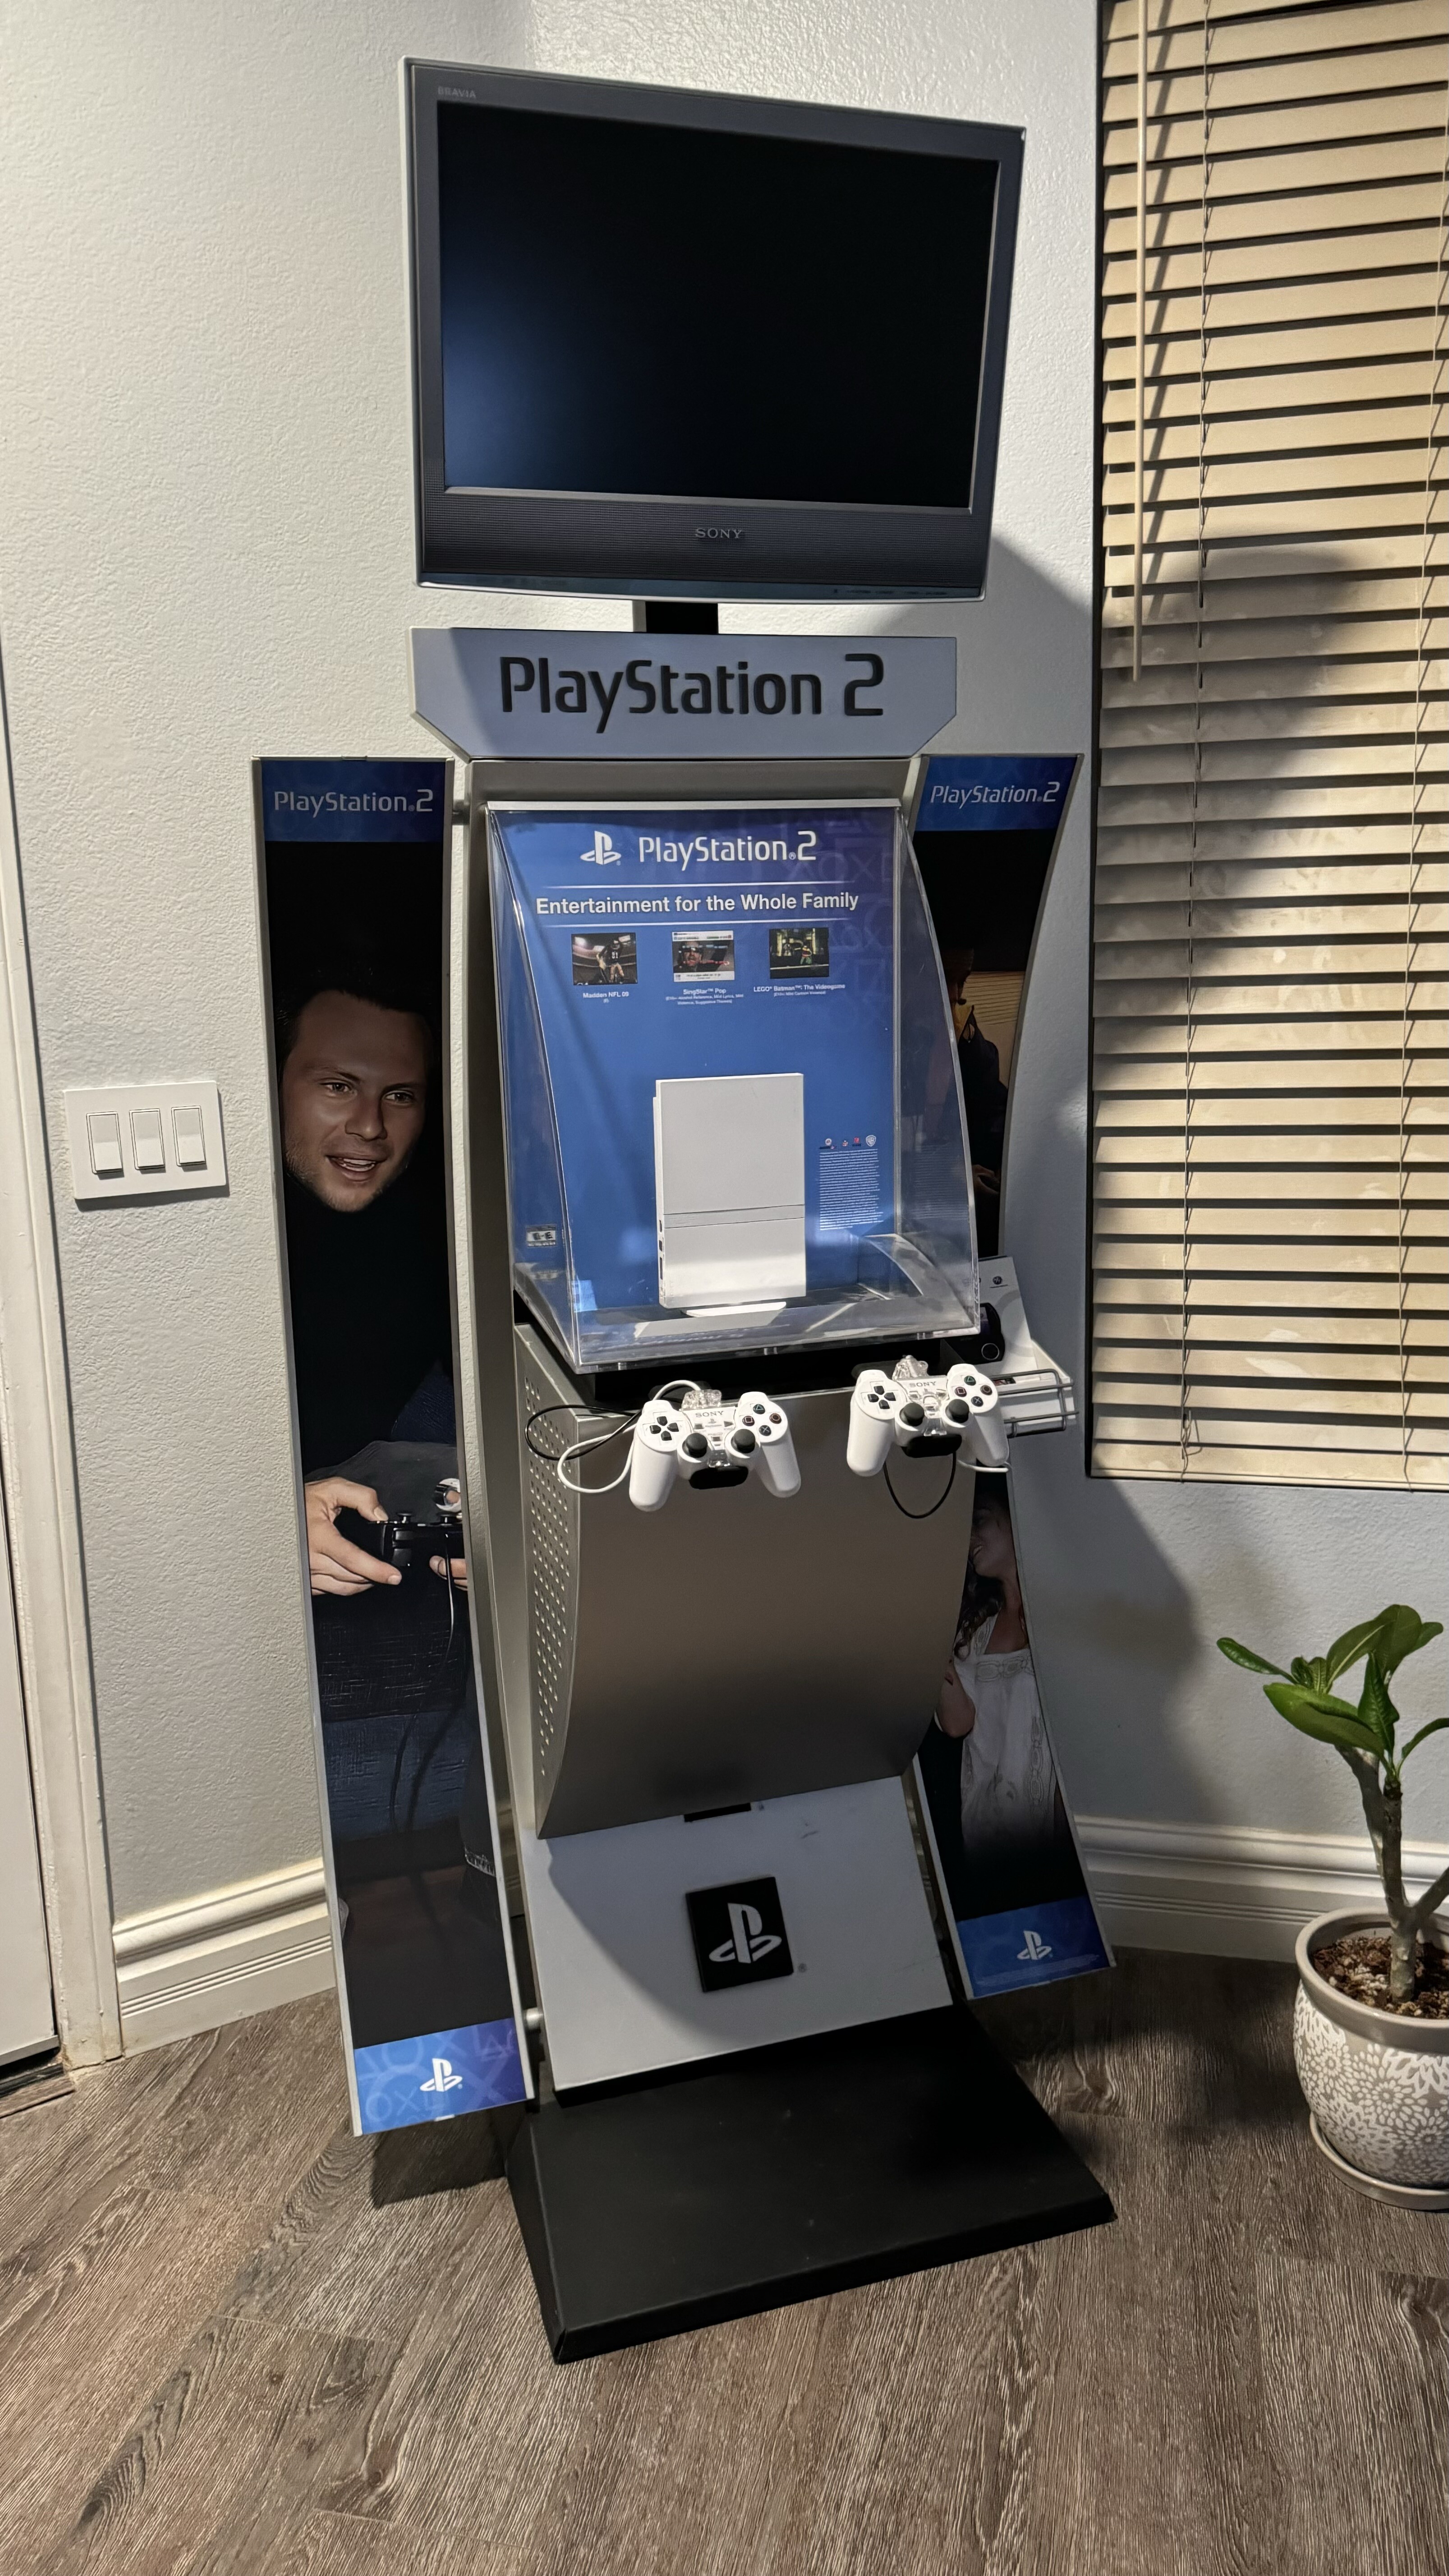  Sony PlayStation 2 Kiosk [Rapid Displays]